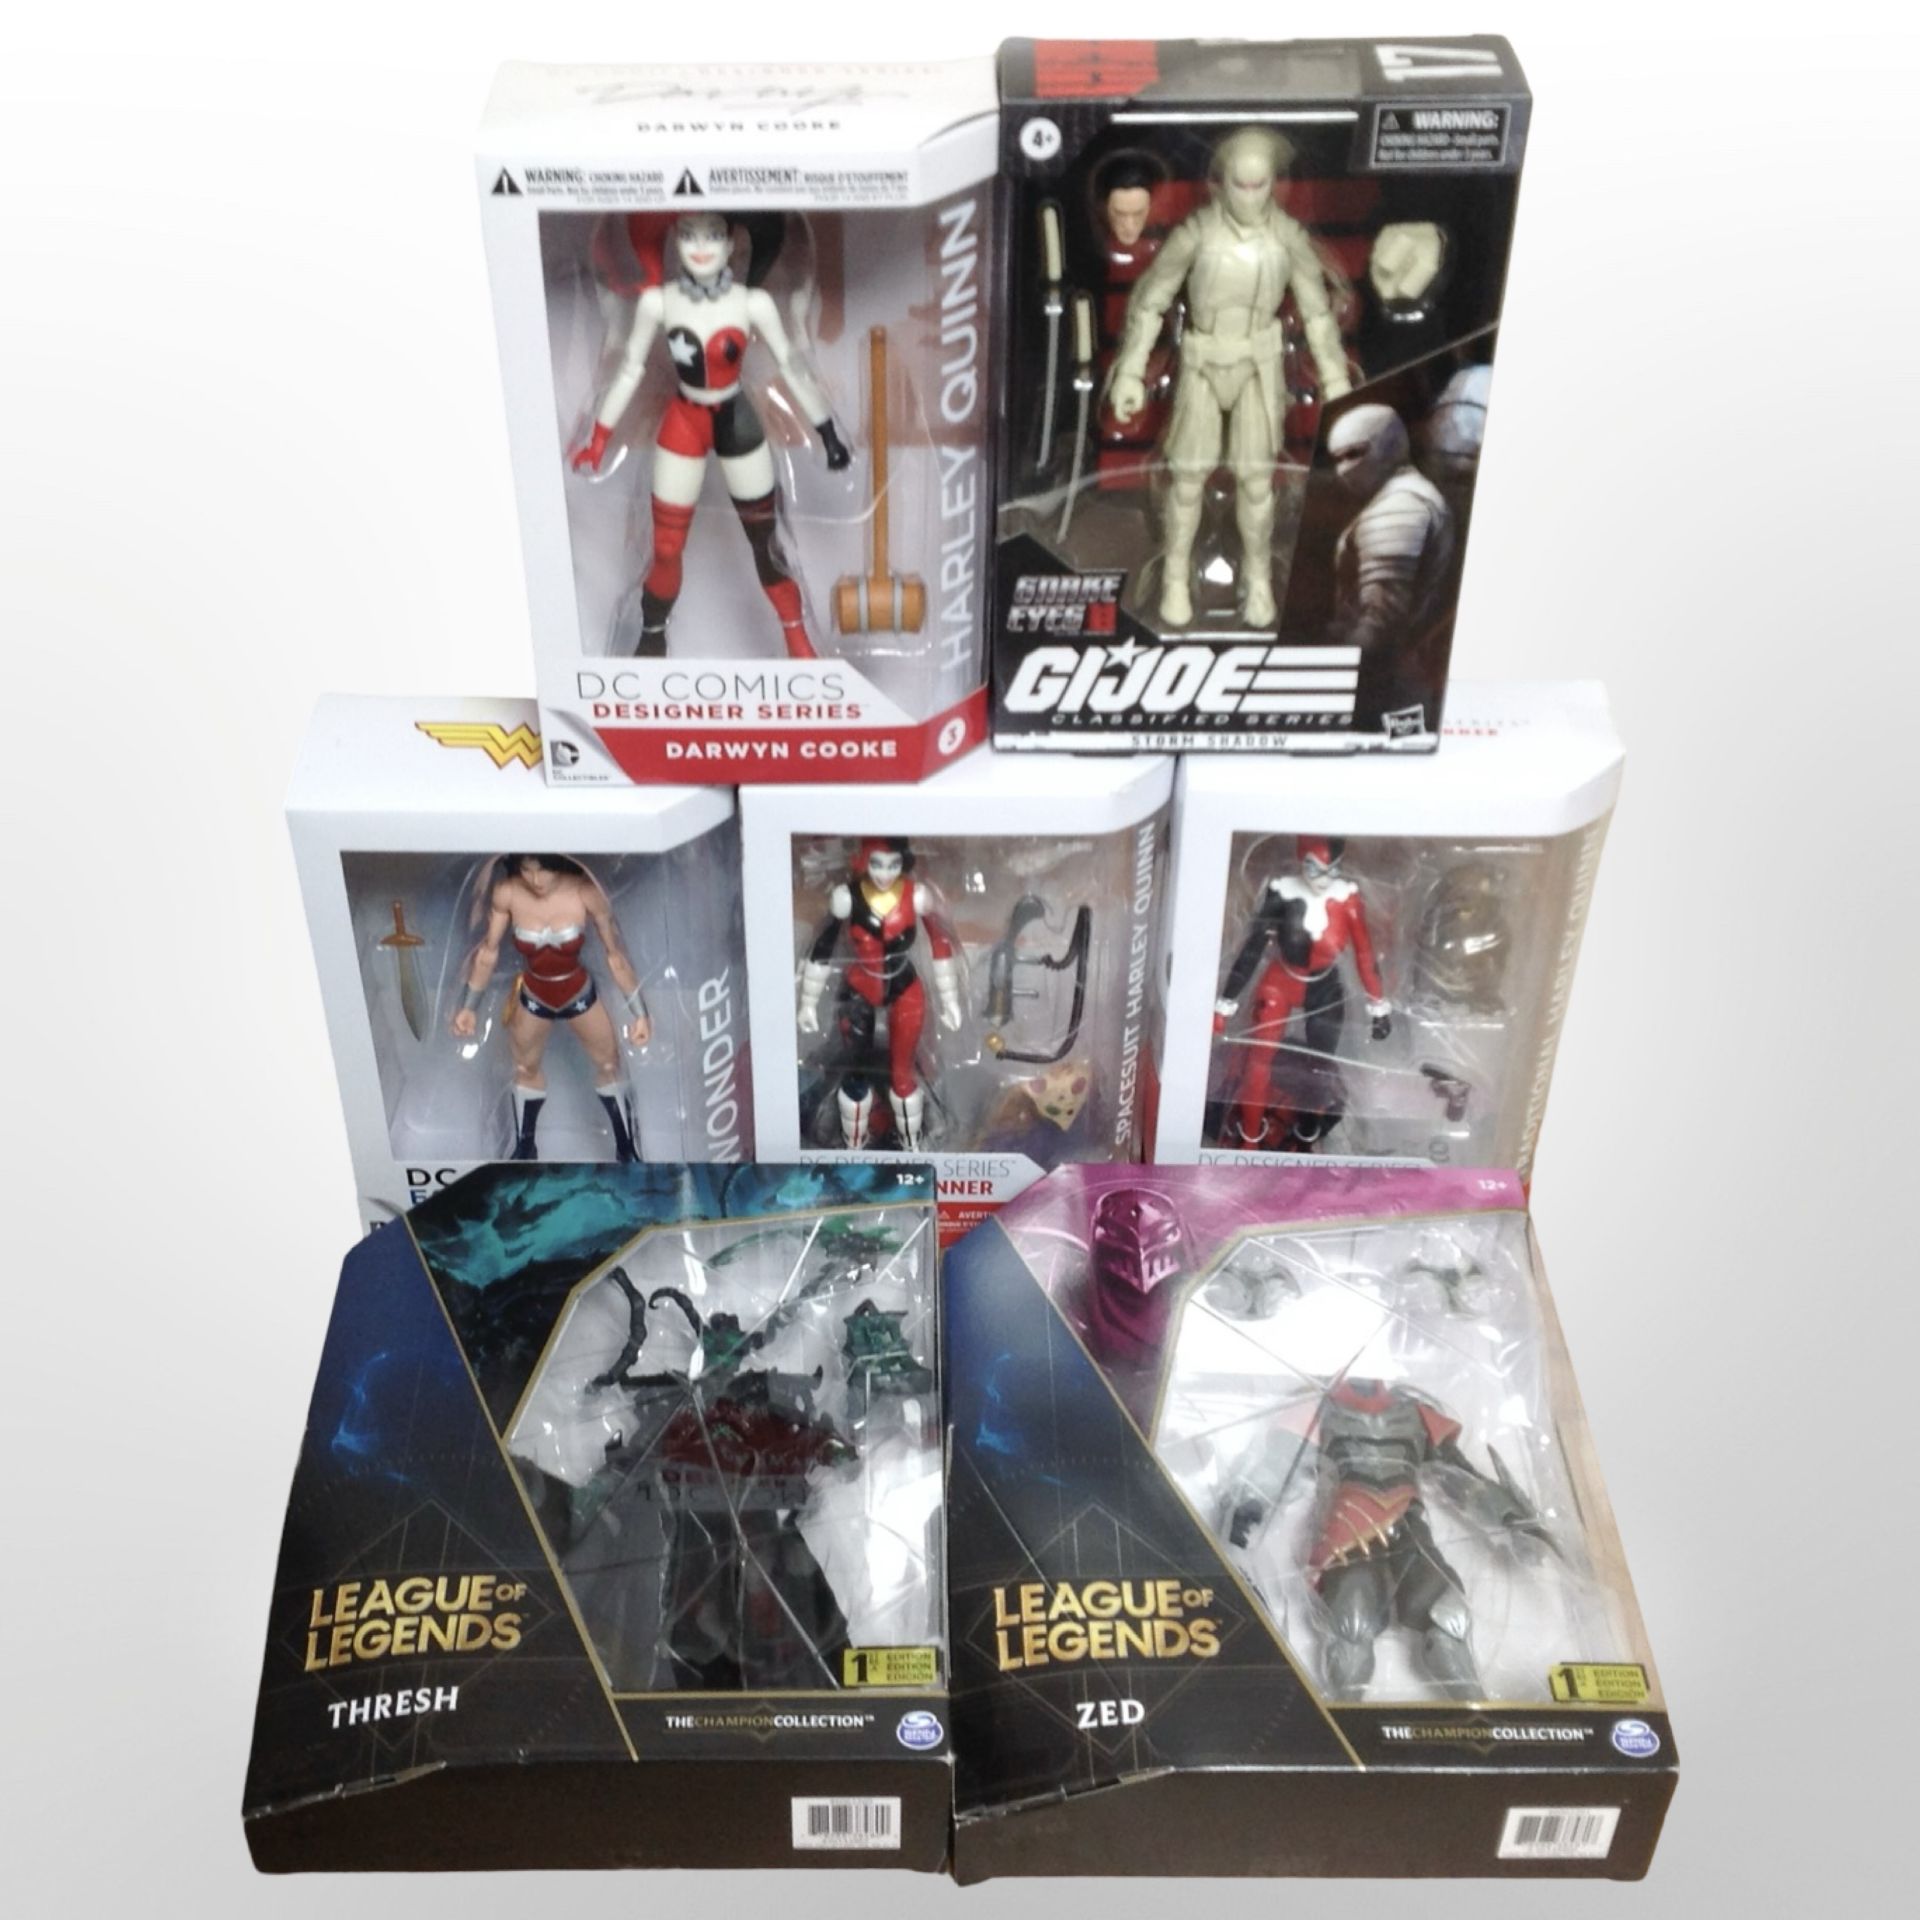 Four DC Collectibles Superhero figurines, Hasbro GI Joe figurine,